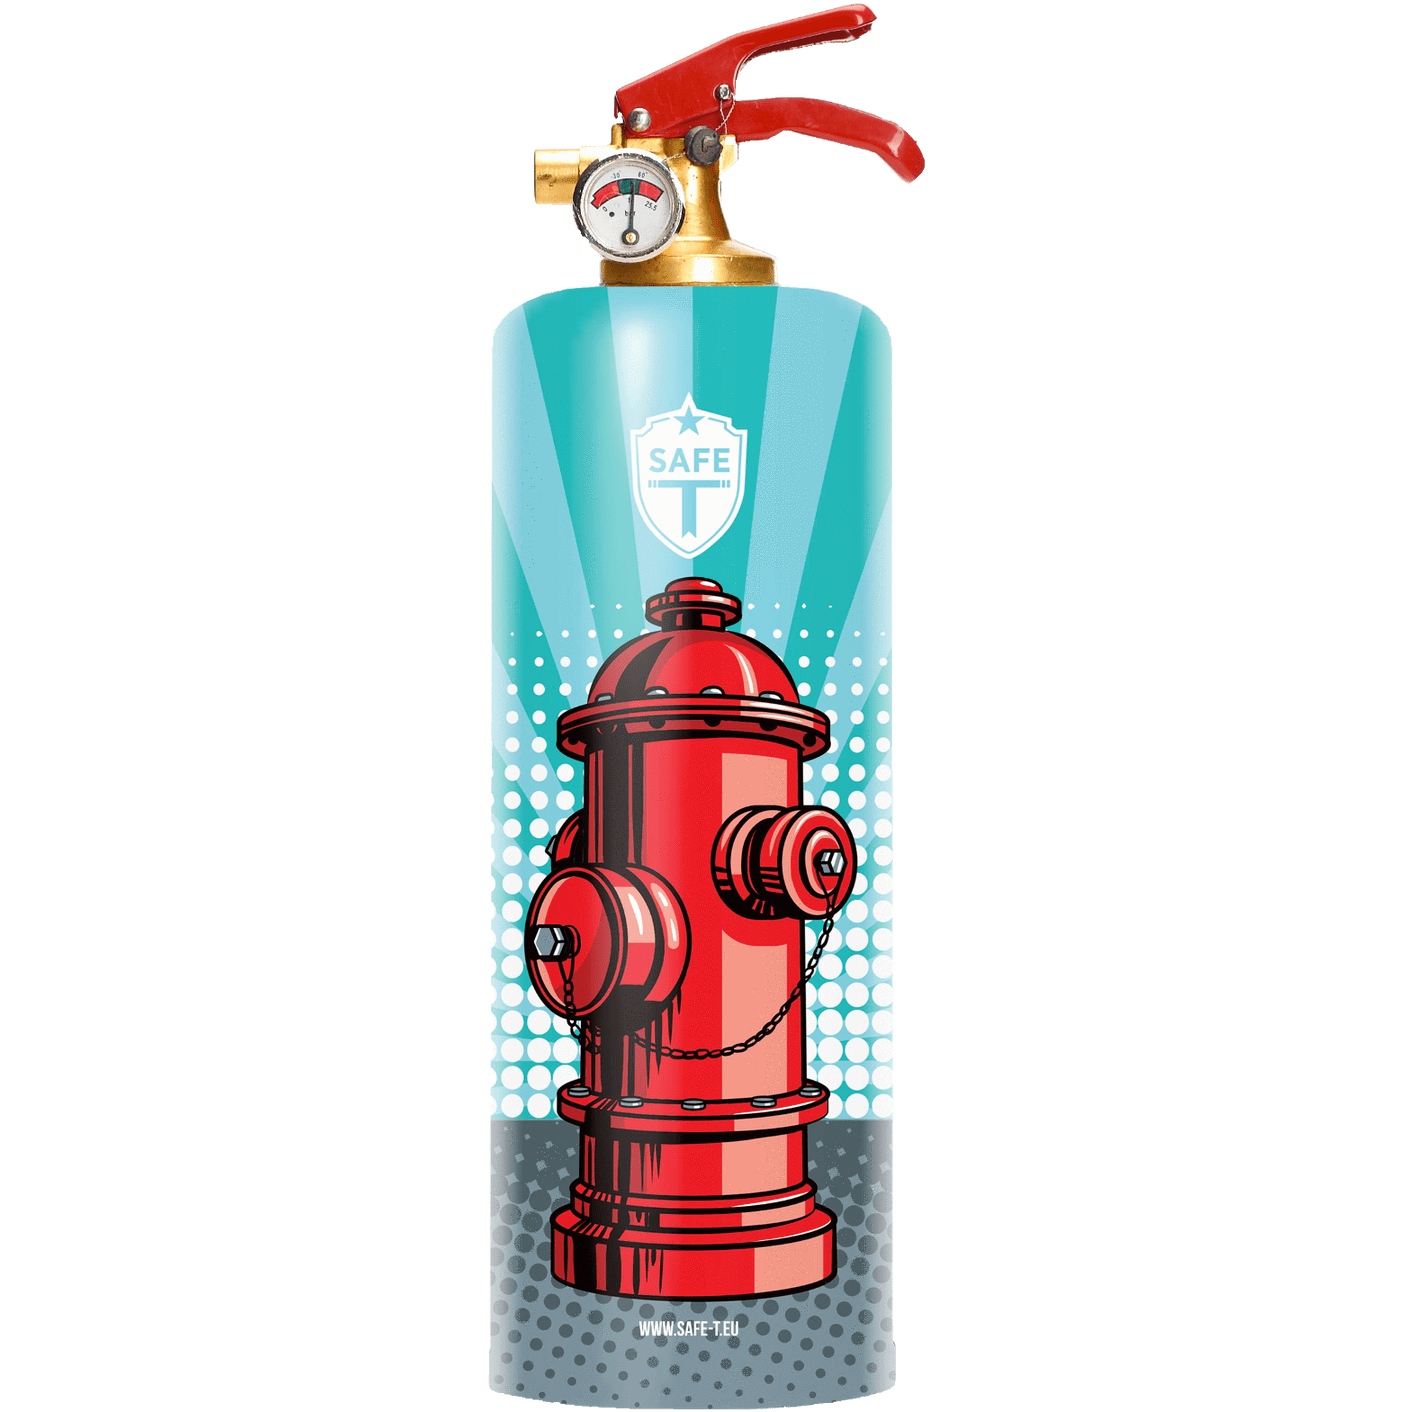 Safe-T Designer Fire Extinguisher pop hydrant housewarming gift